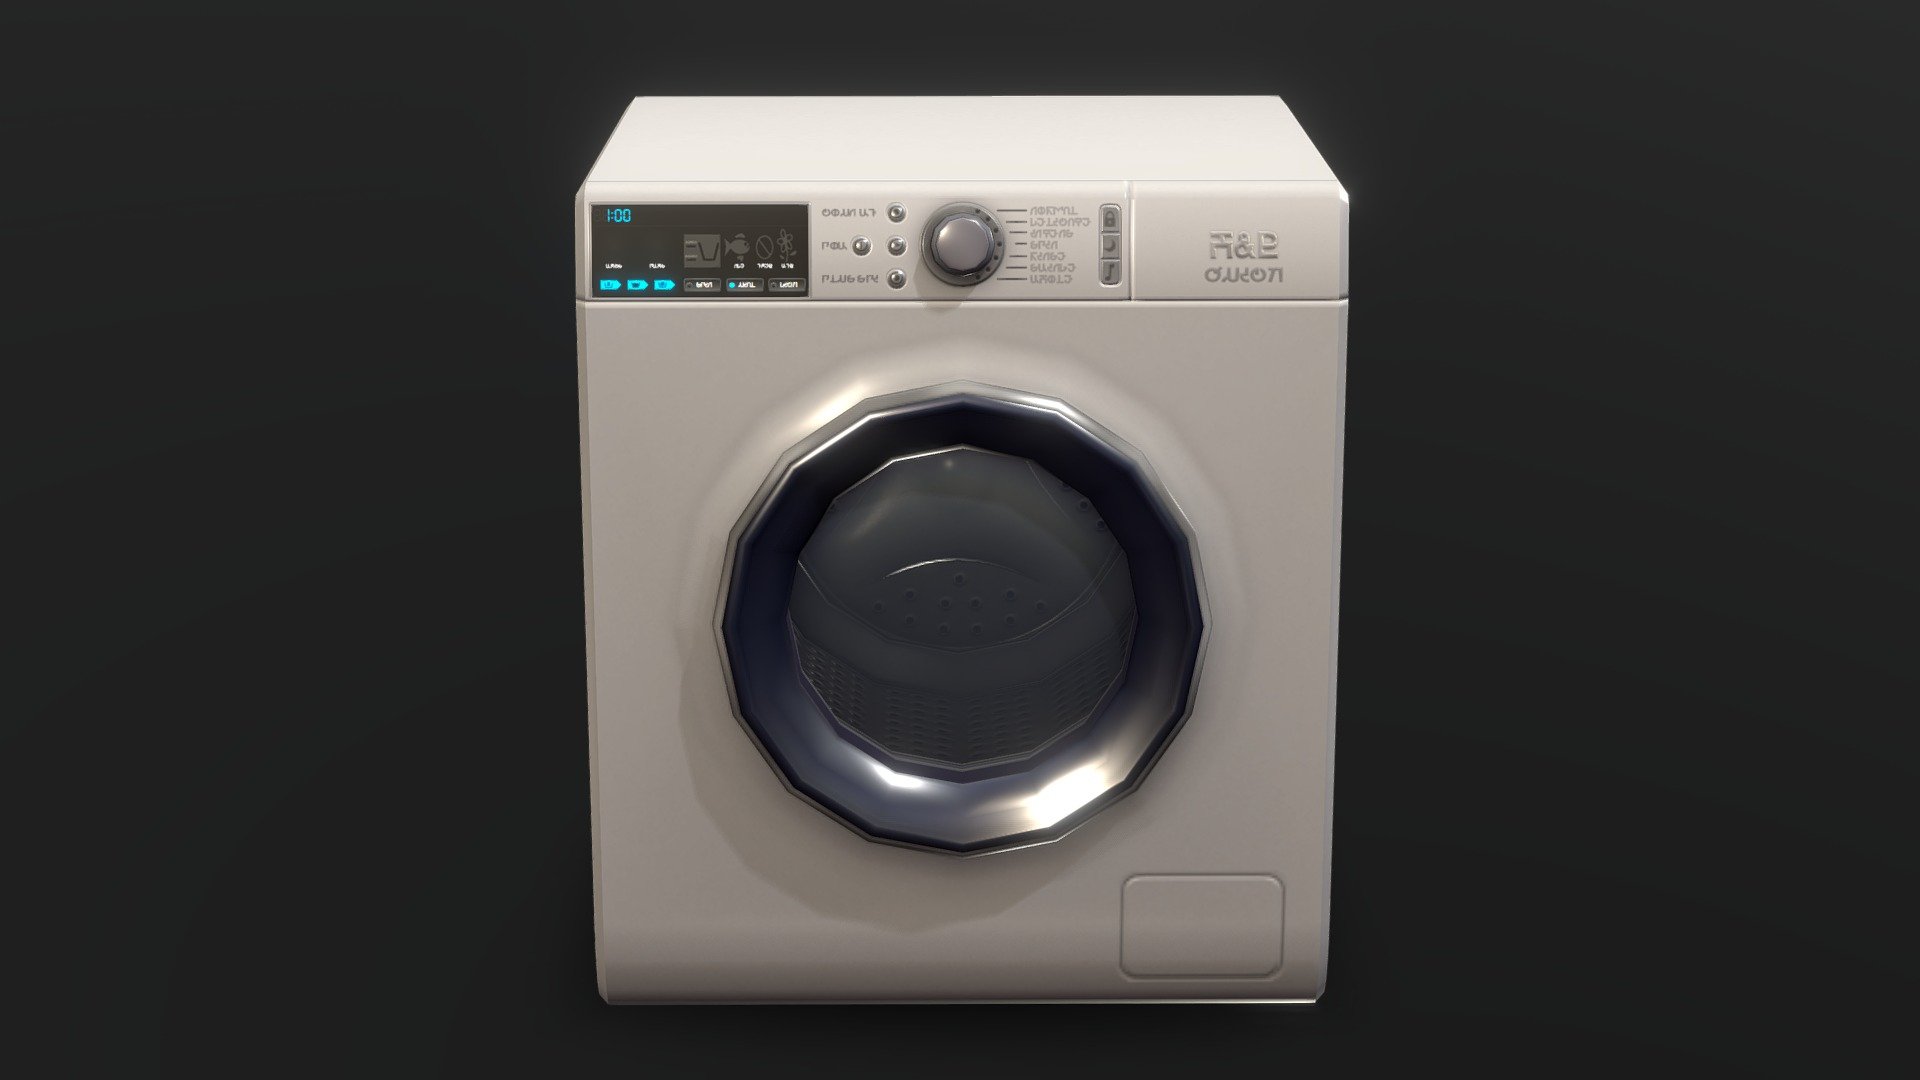 Basic Washing Machine - The Sims 4